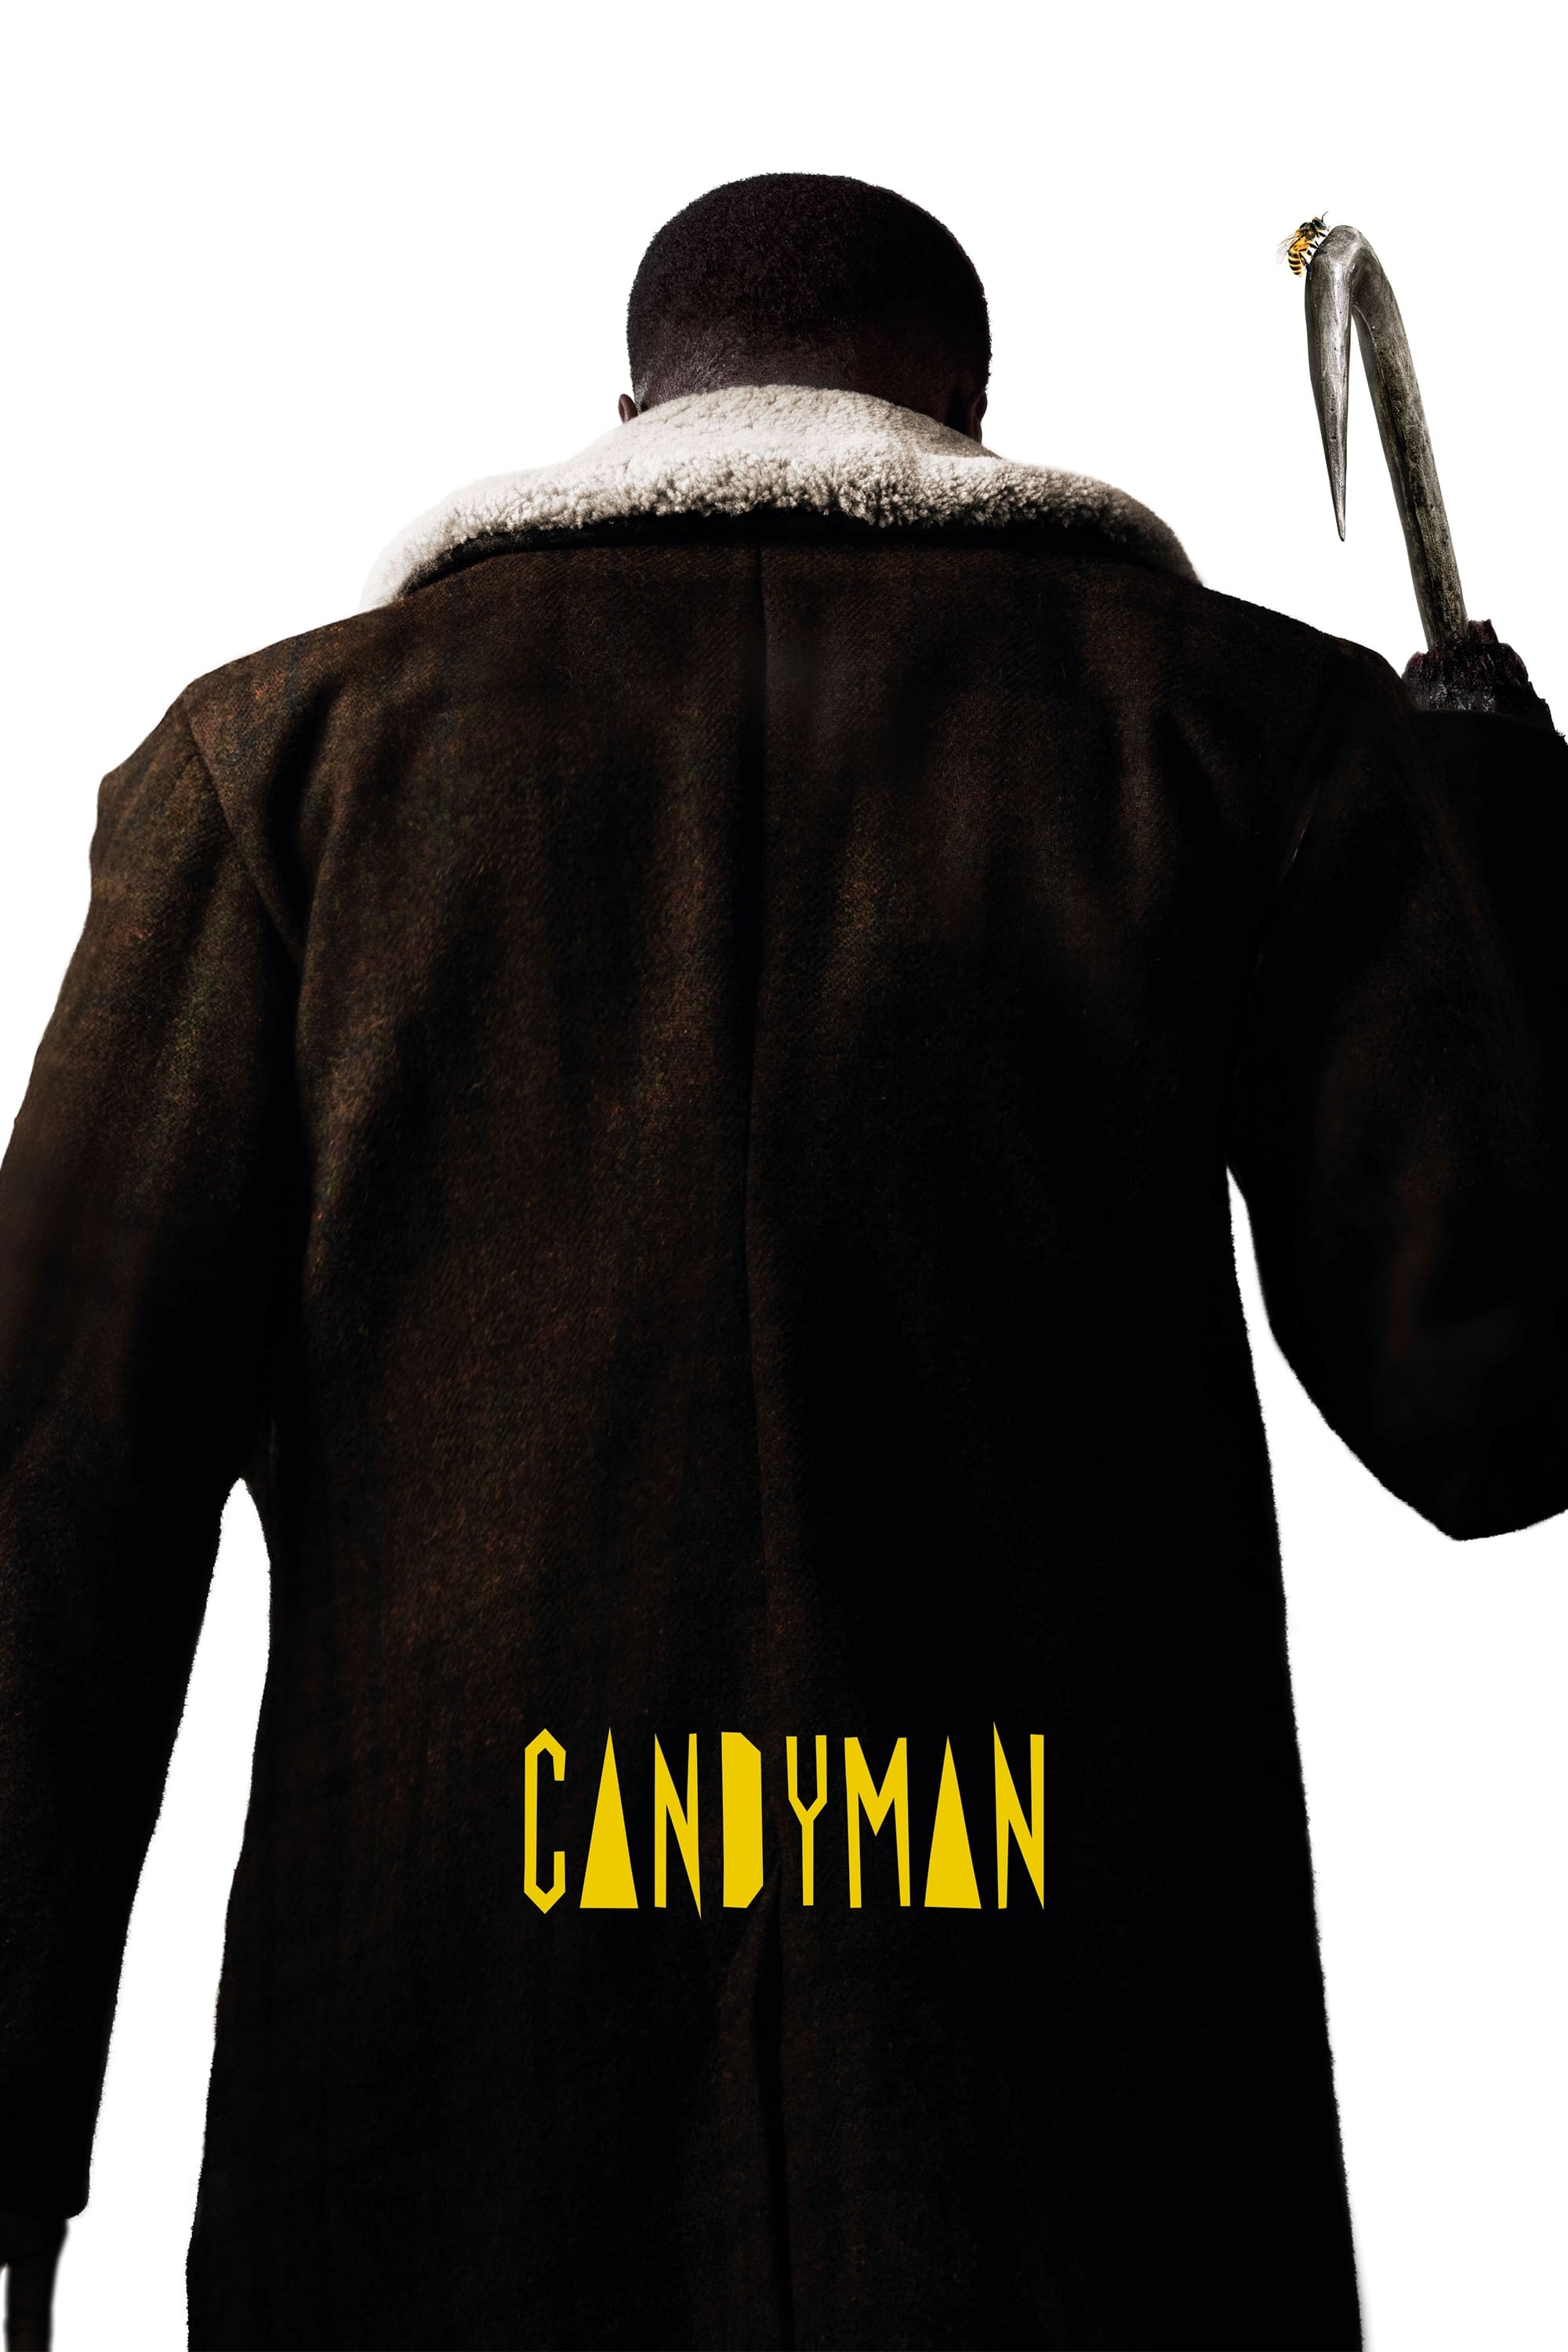 Candyman (2021) PLACEBO Full HD 1080p Latino